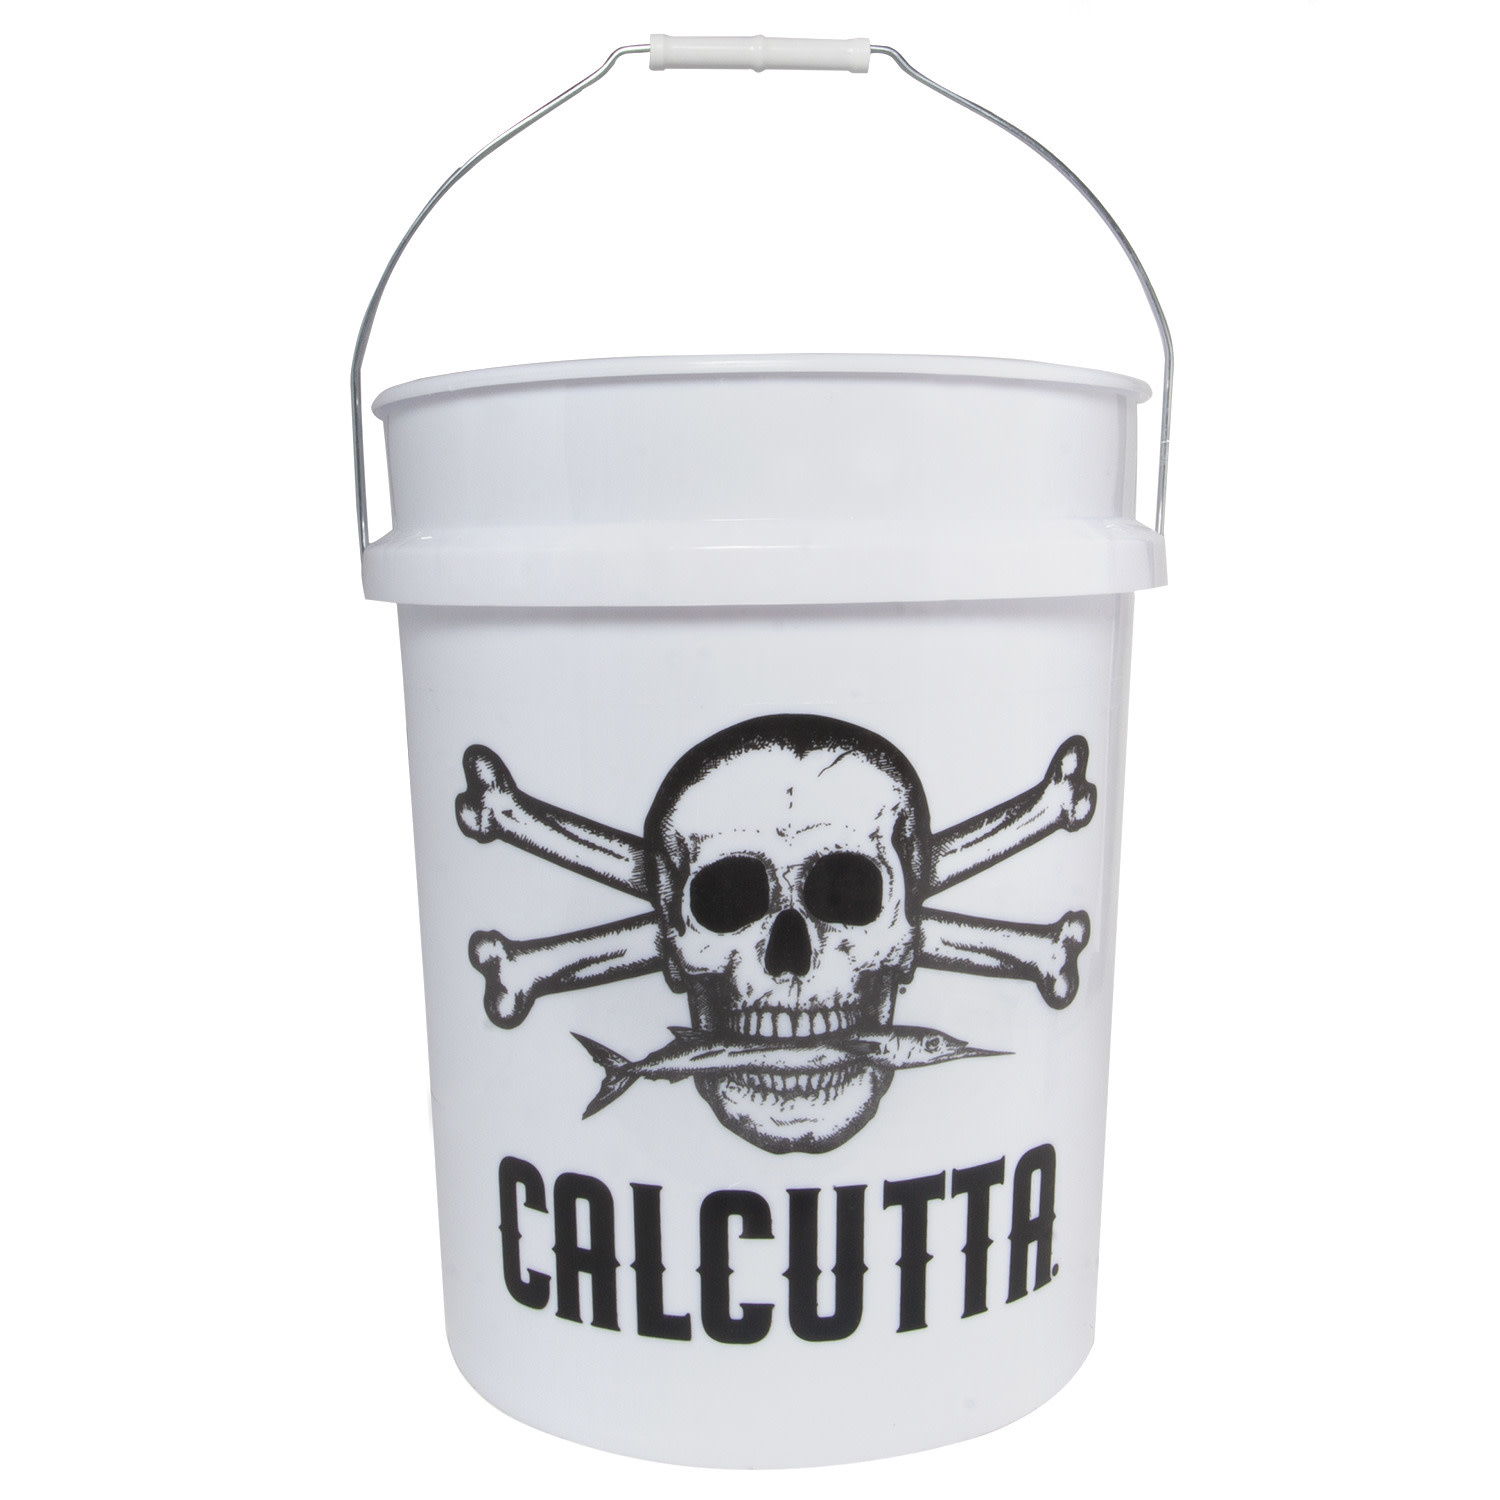 Calcutta CB-W Bucket 5 Gallon White - Angler's Choice Tackle